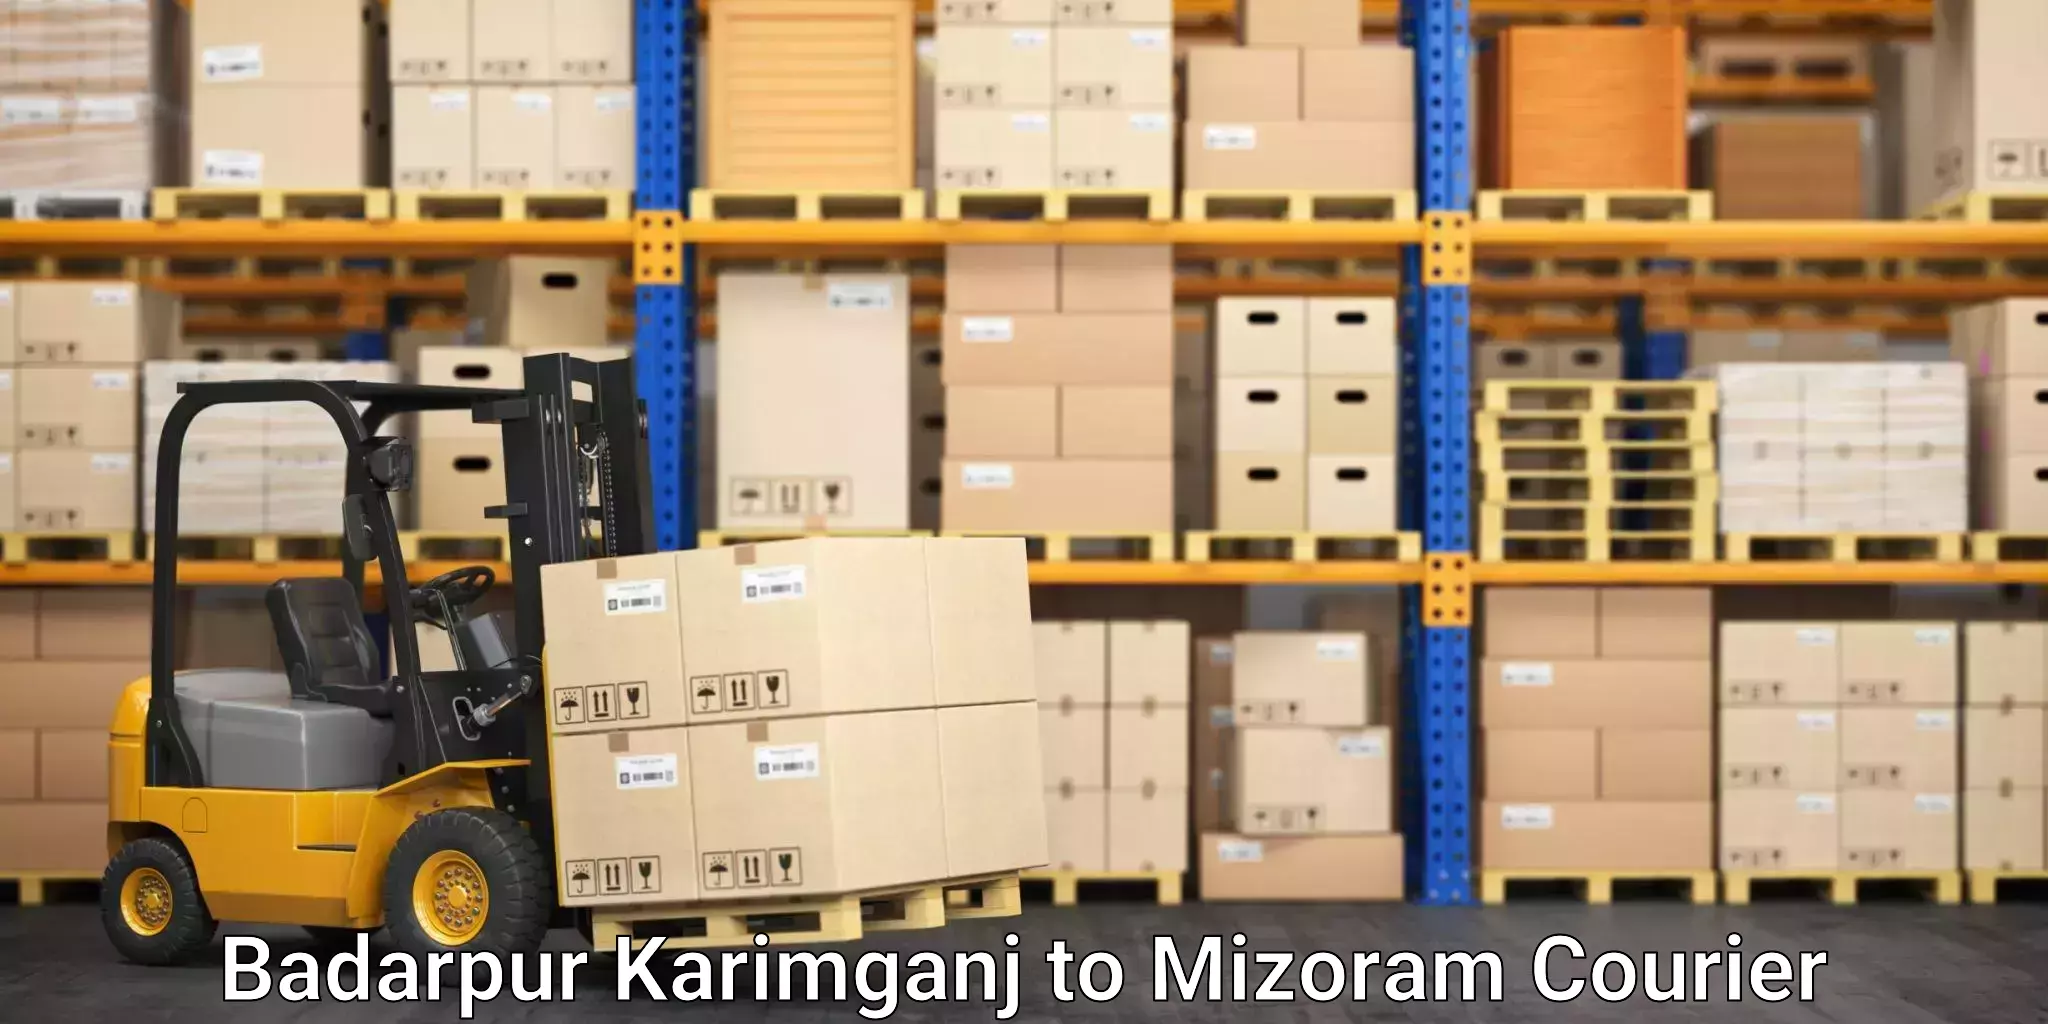 Comprehensive delivery network Badarpur Karimganj to Mizoram